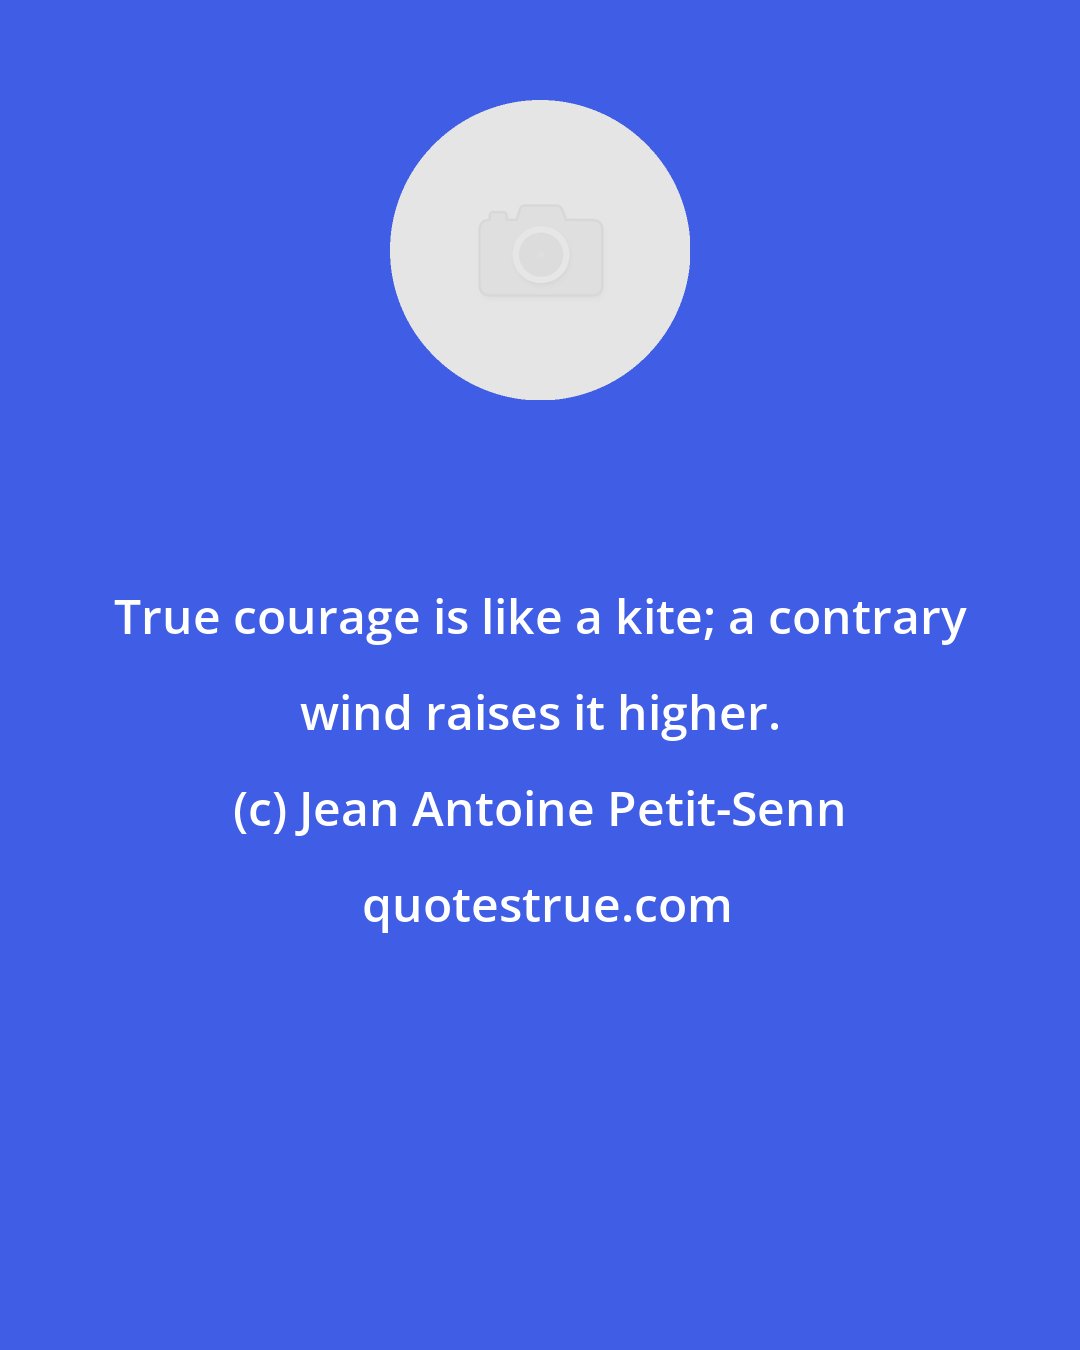 Jean Antoine Petit-Senn: True courage is like a kite; a contrary wind raises it higher.